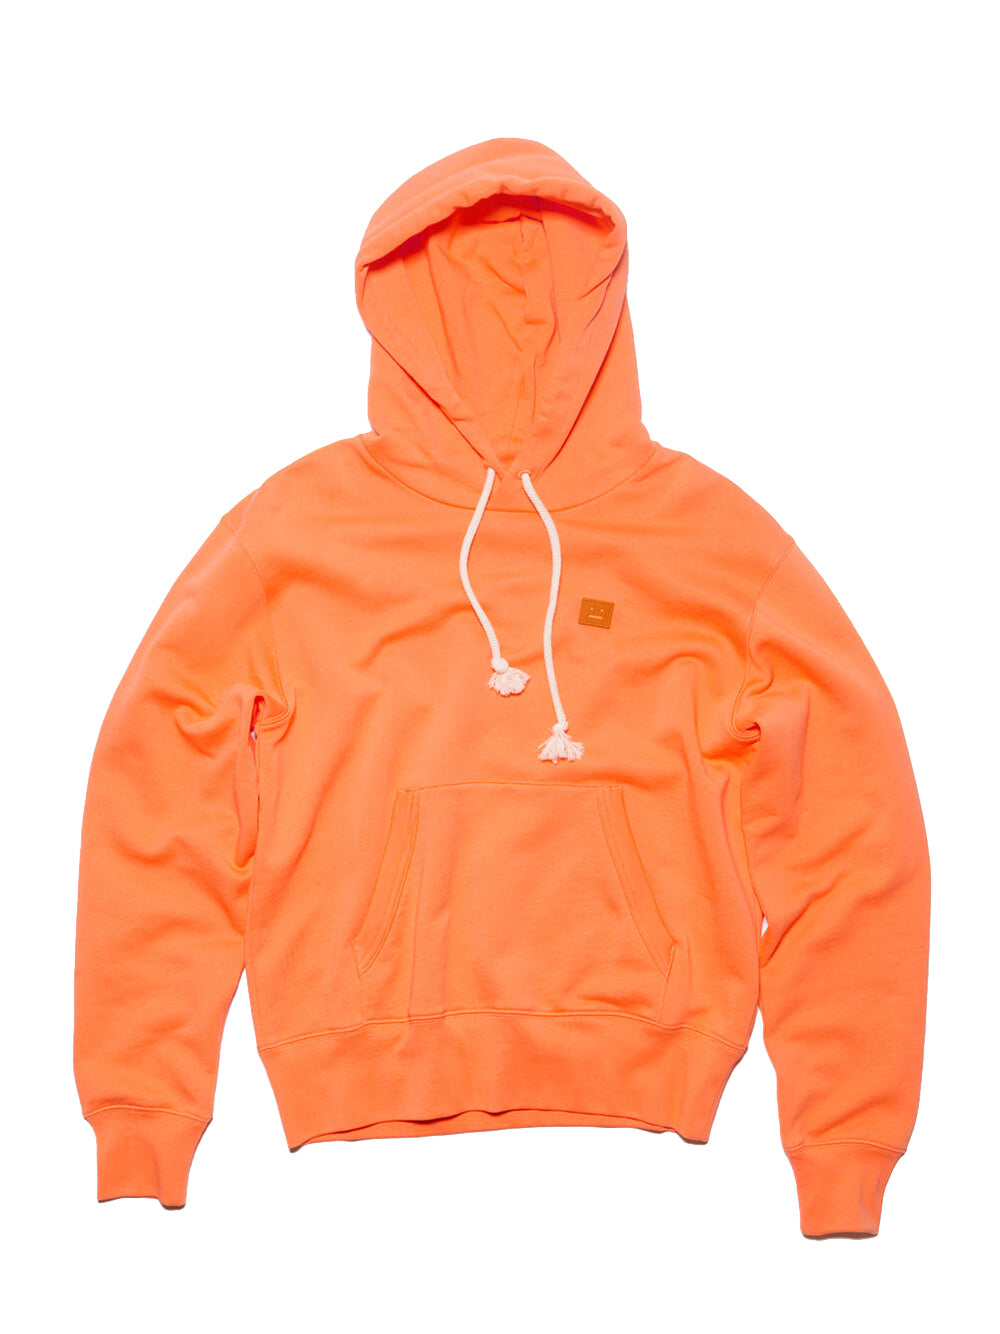 Hooded Sweatshirt (Mandarin Orange)